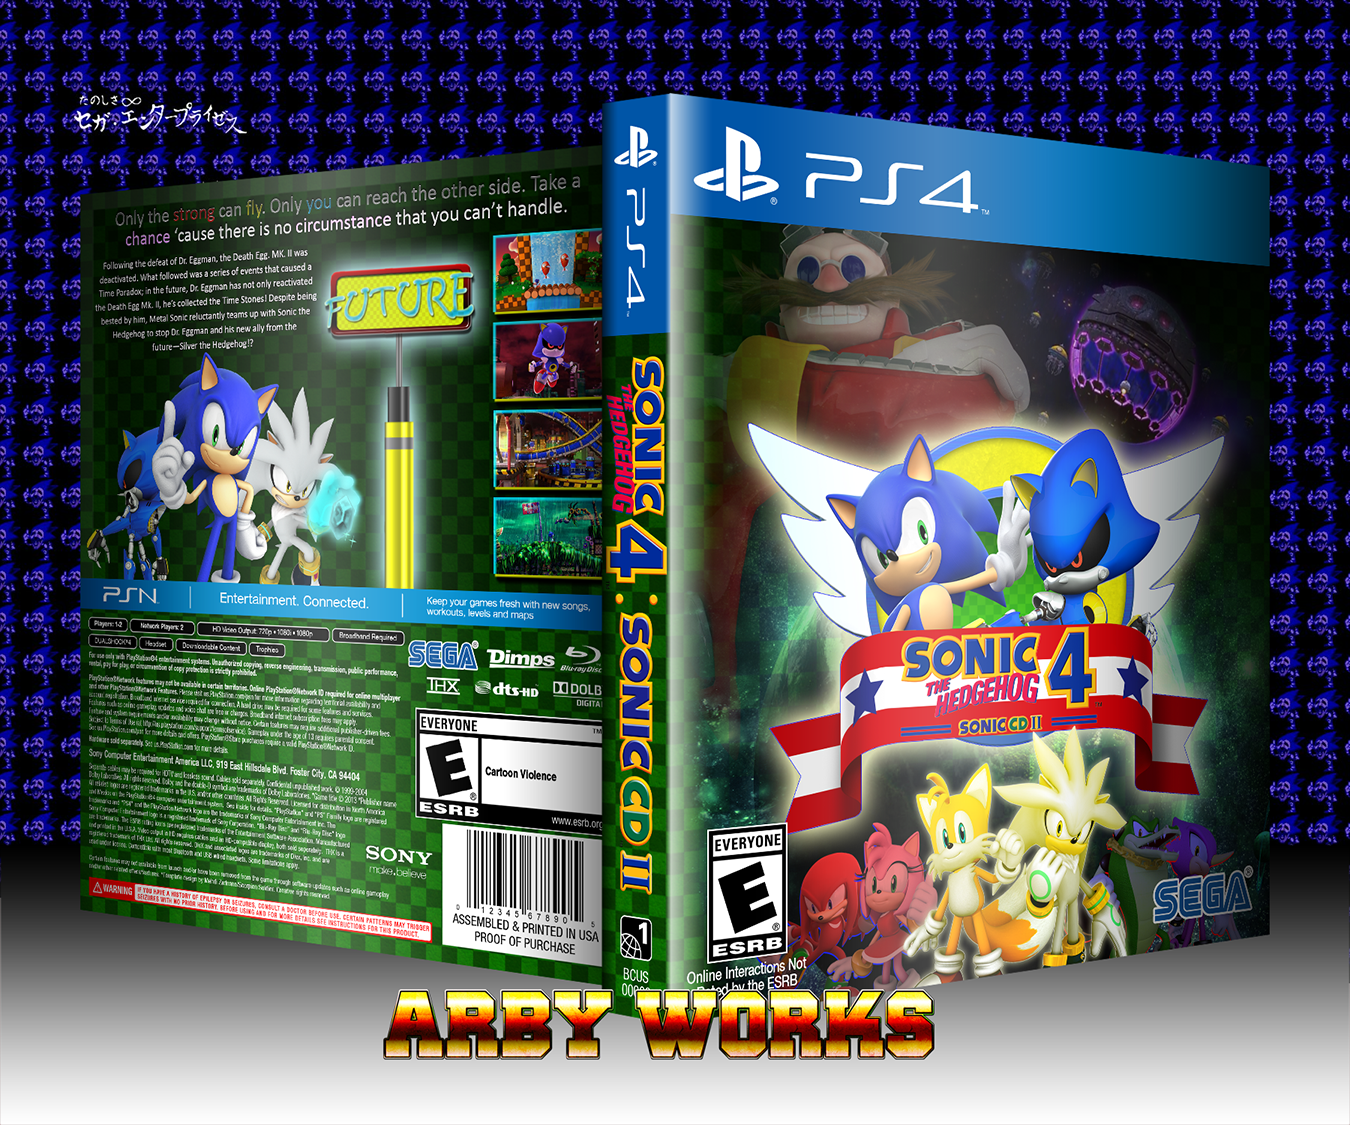 Sonic the Hedgehog 4: Sonic CD II box cover